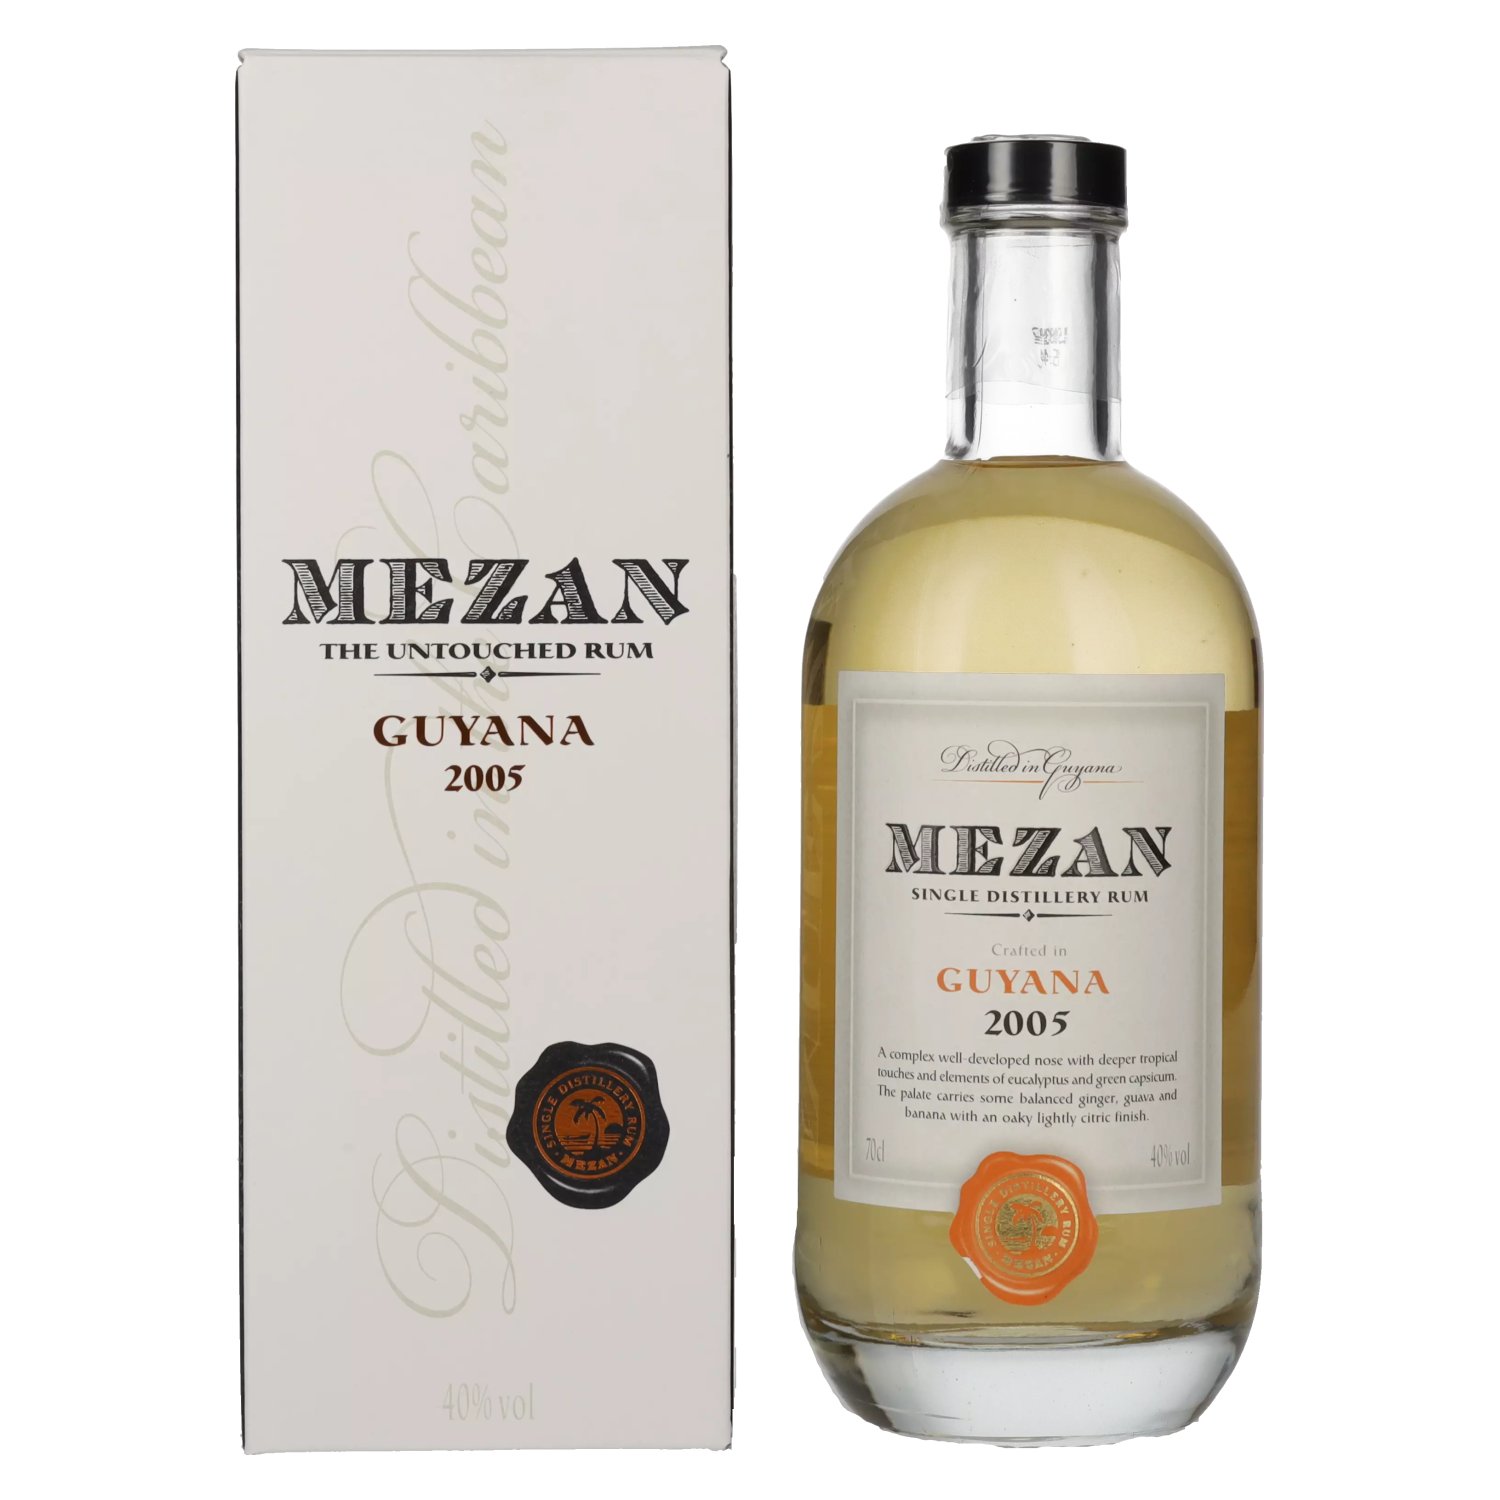 Mezan Single Distillery Rum GUYANA Giftbox Vol. 0,7l 2005 in 40